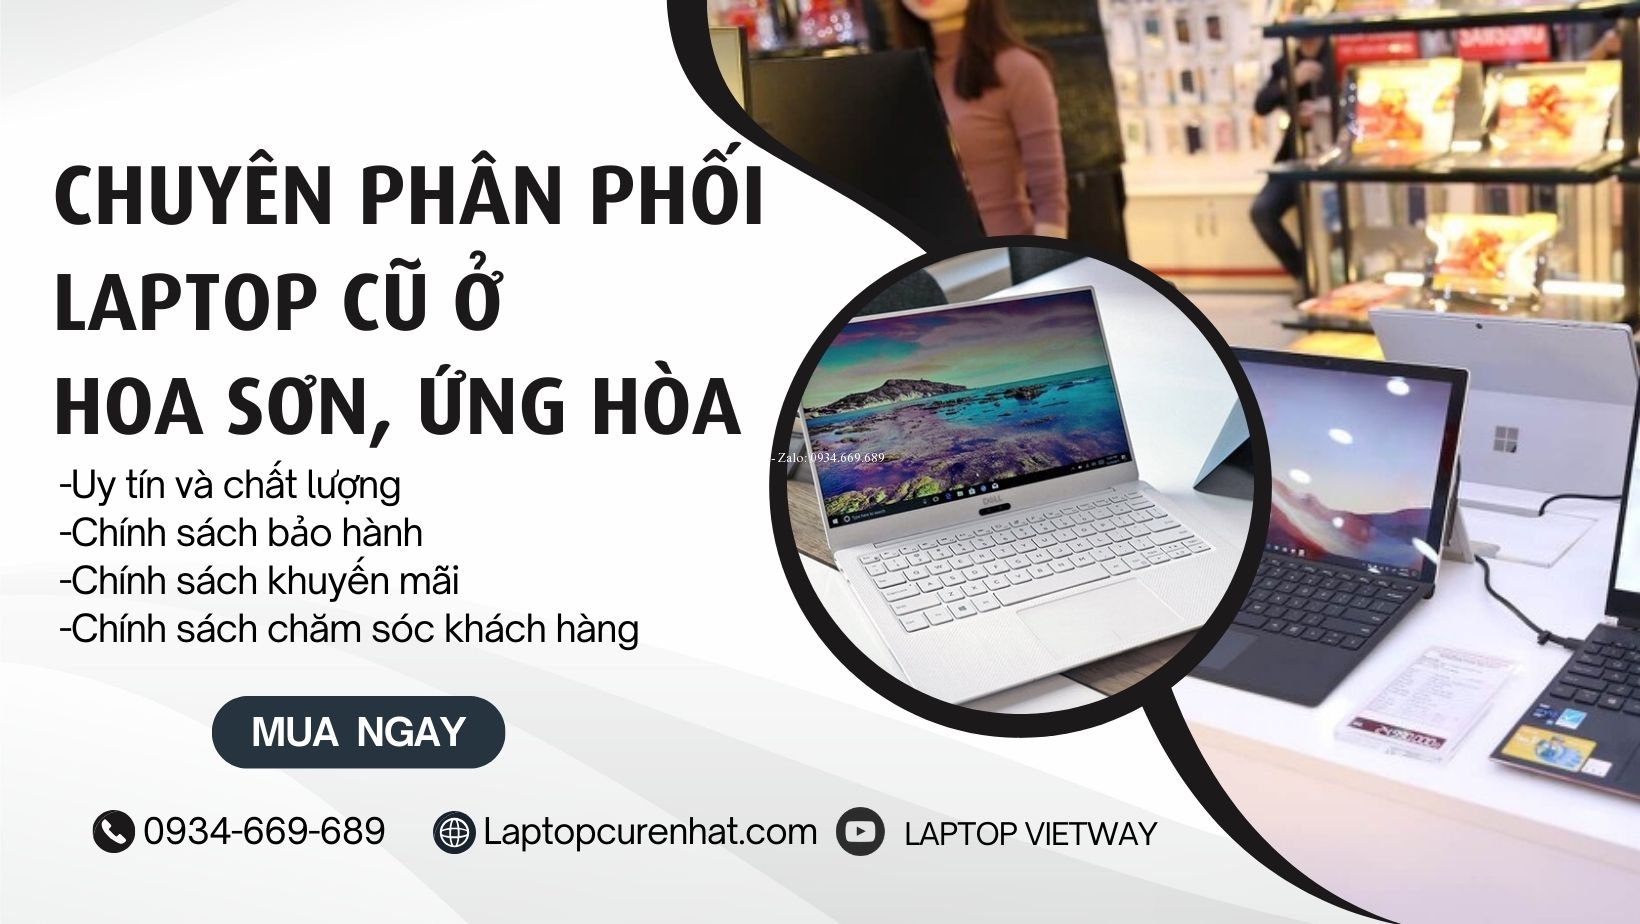 laptop-vietway-chuyen-phan-phoi-laptop-cu-o-hoa-son-ung-hoa